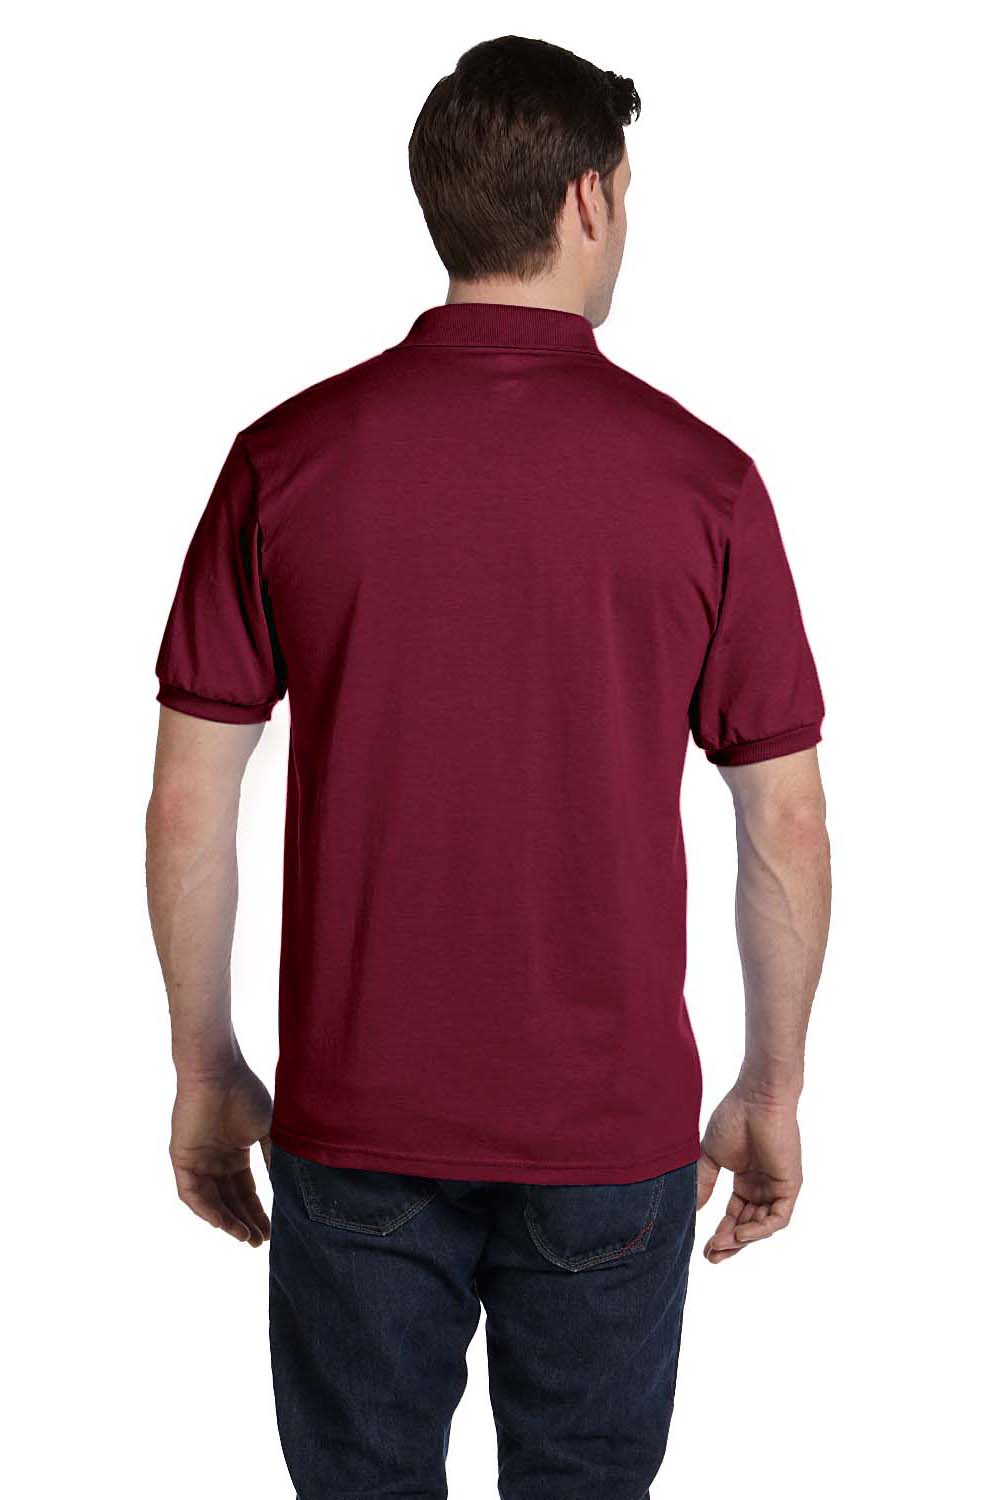 Hanes 054 Mens EcoSmart Short Sleeve Polo Shirt Cardinal Red Back